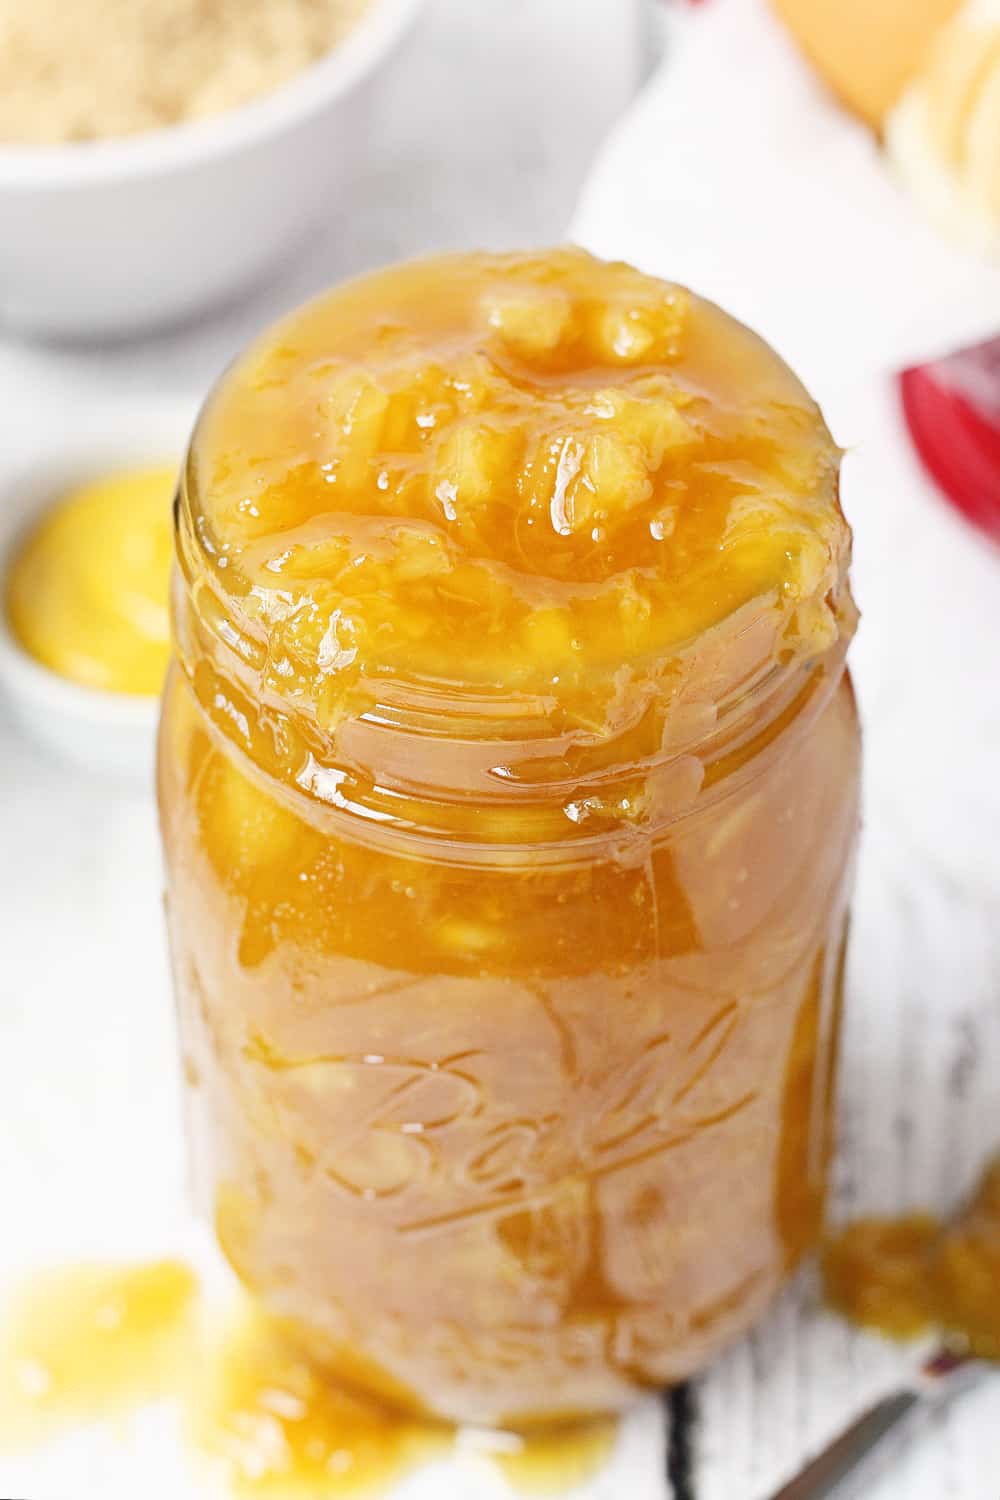 Warm Pineapple Sauce in a glass jar.